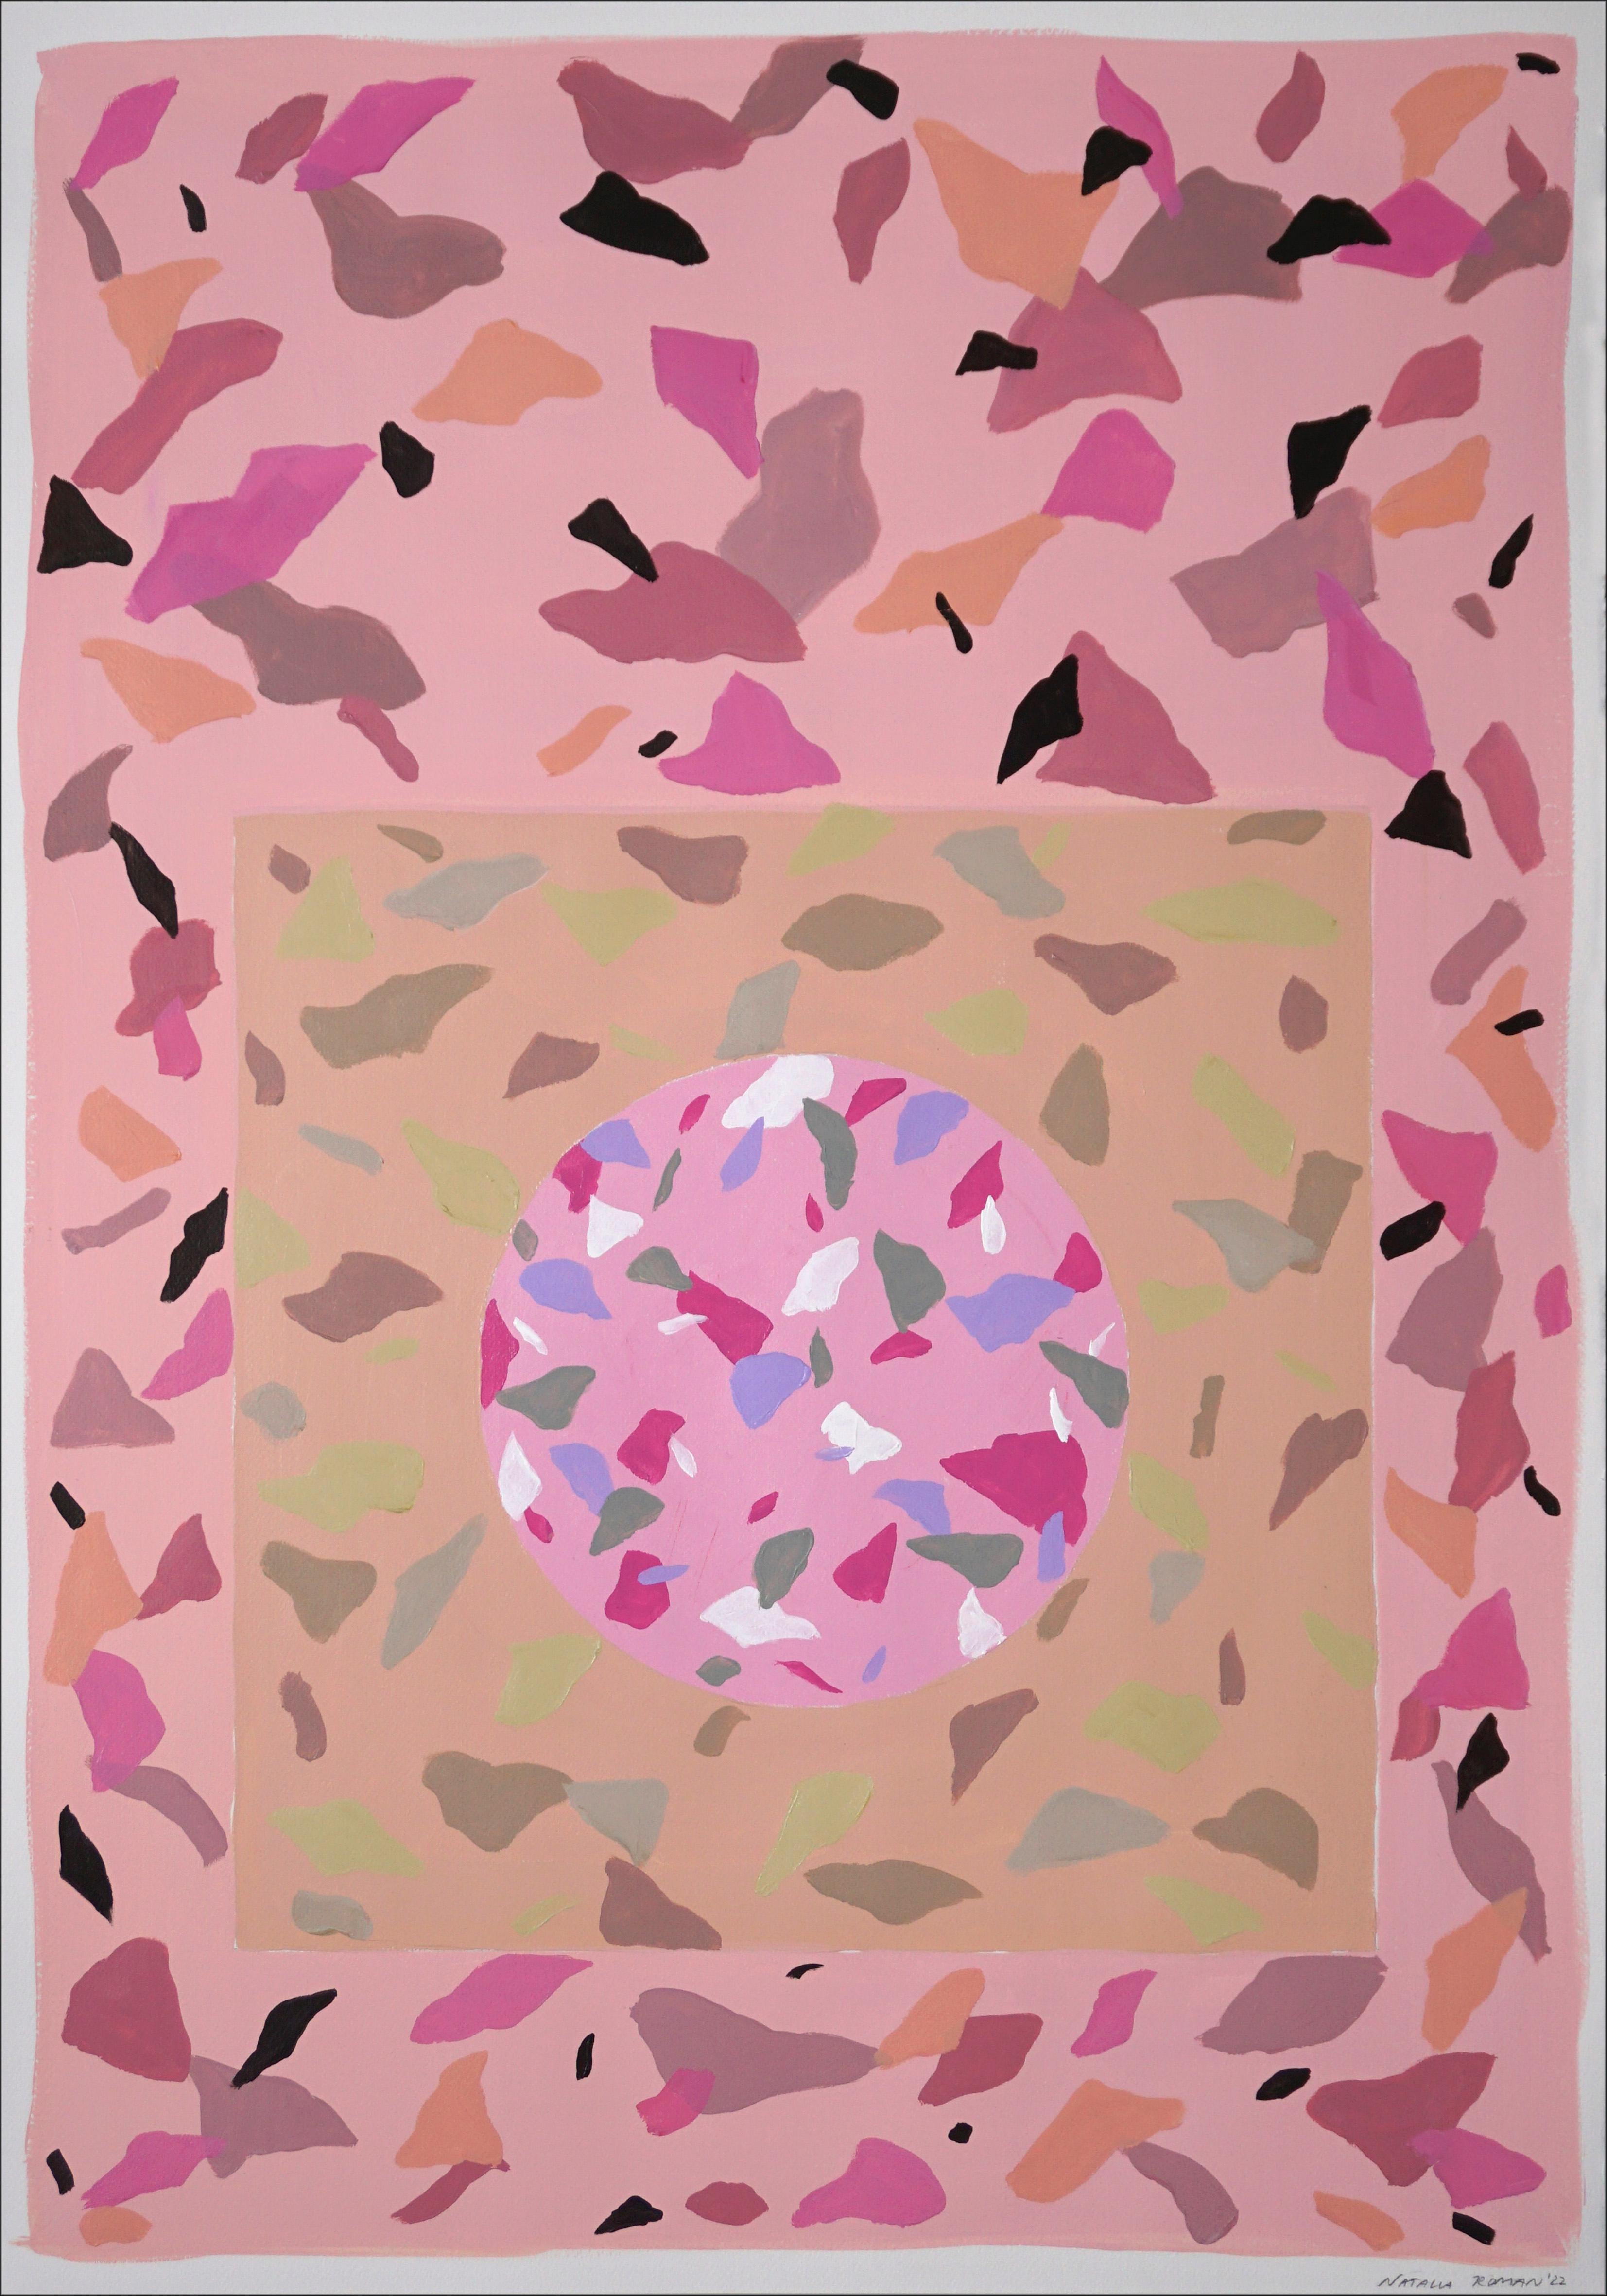 Pastel Pink Shapes, Italian Terrazzo Tiles Inspiration in Soft Warm Skin Tones 